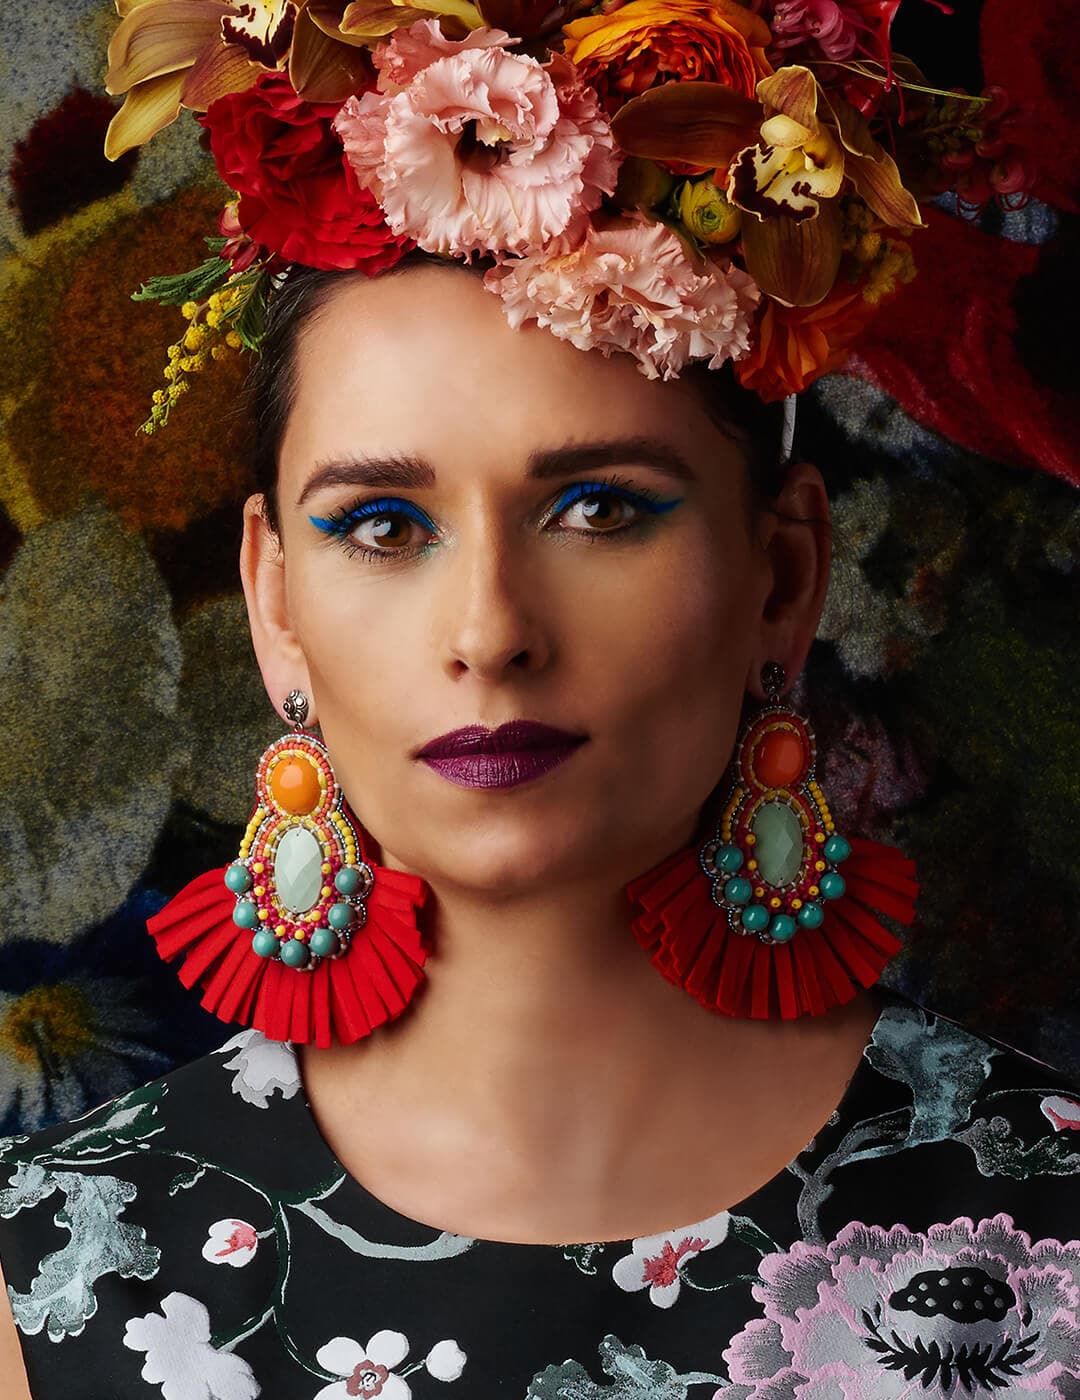 Portrait of Reina Rebelde rocking a floral head piece against floral background